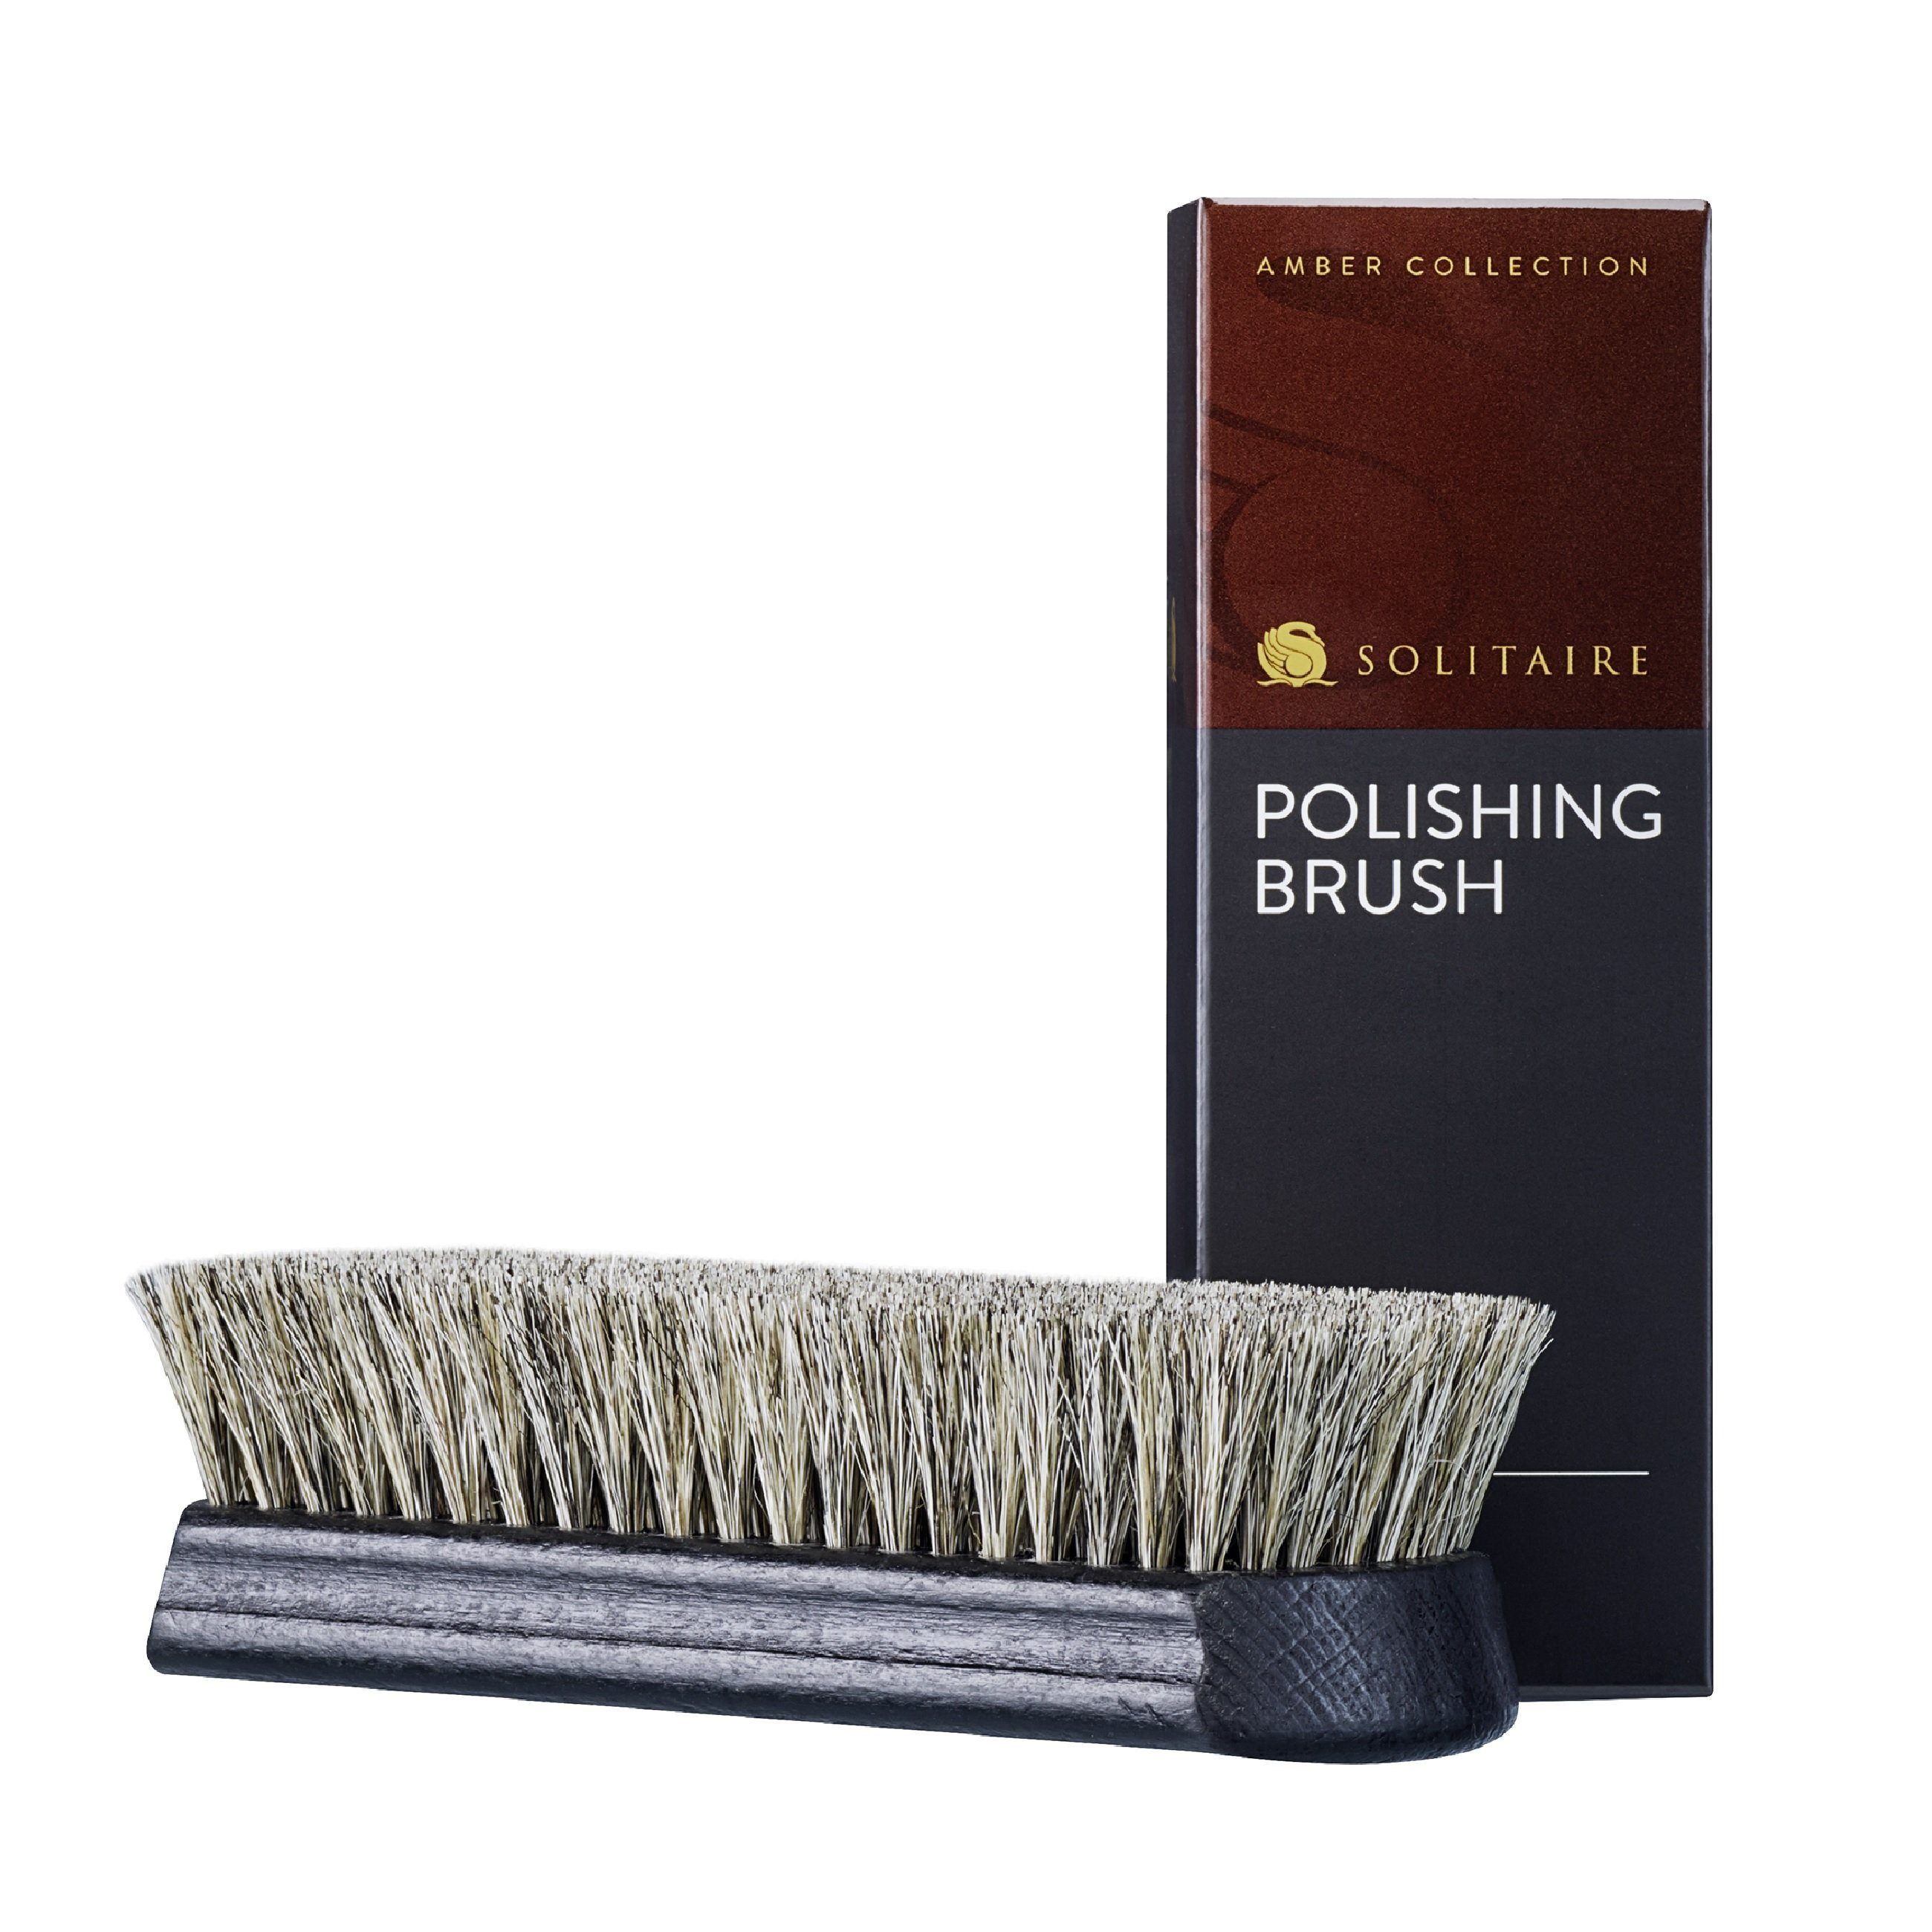 Solitaire Schuhputzbürste Premium Amber Collection - Polishing Brush